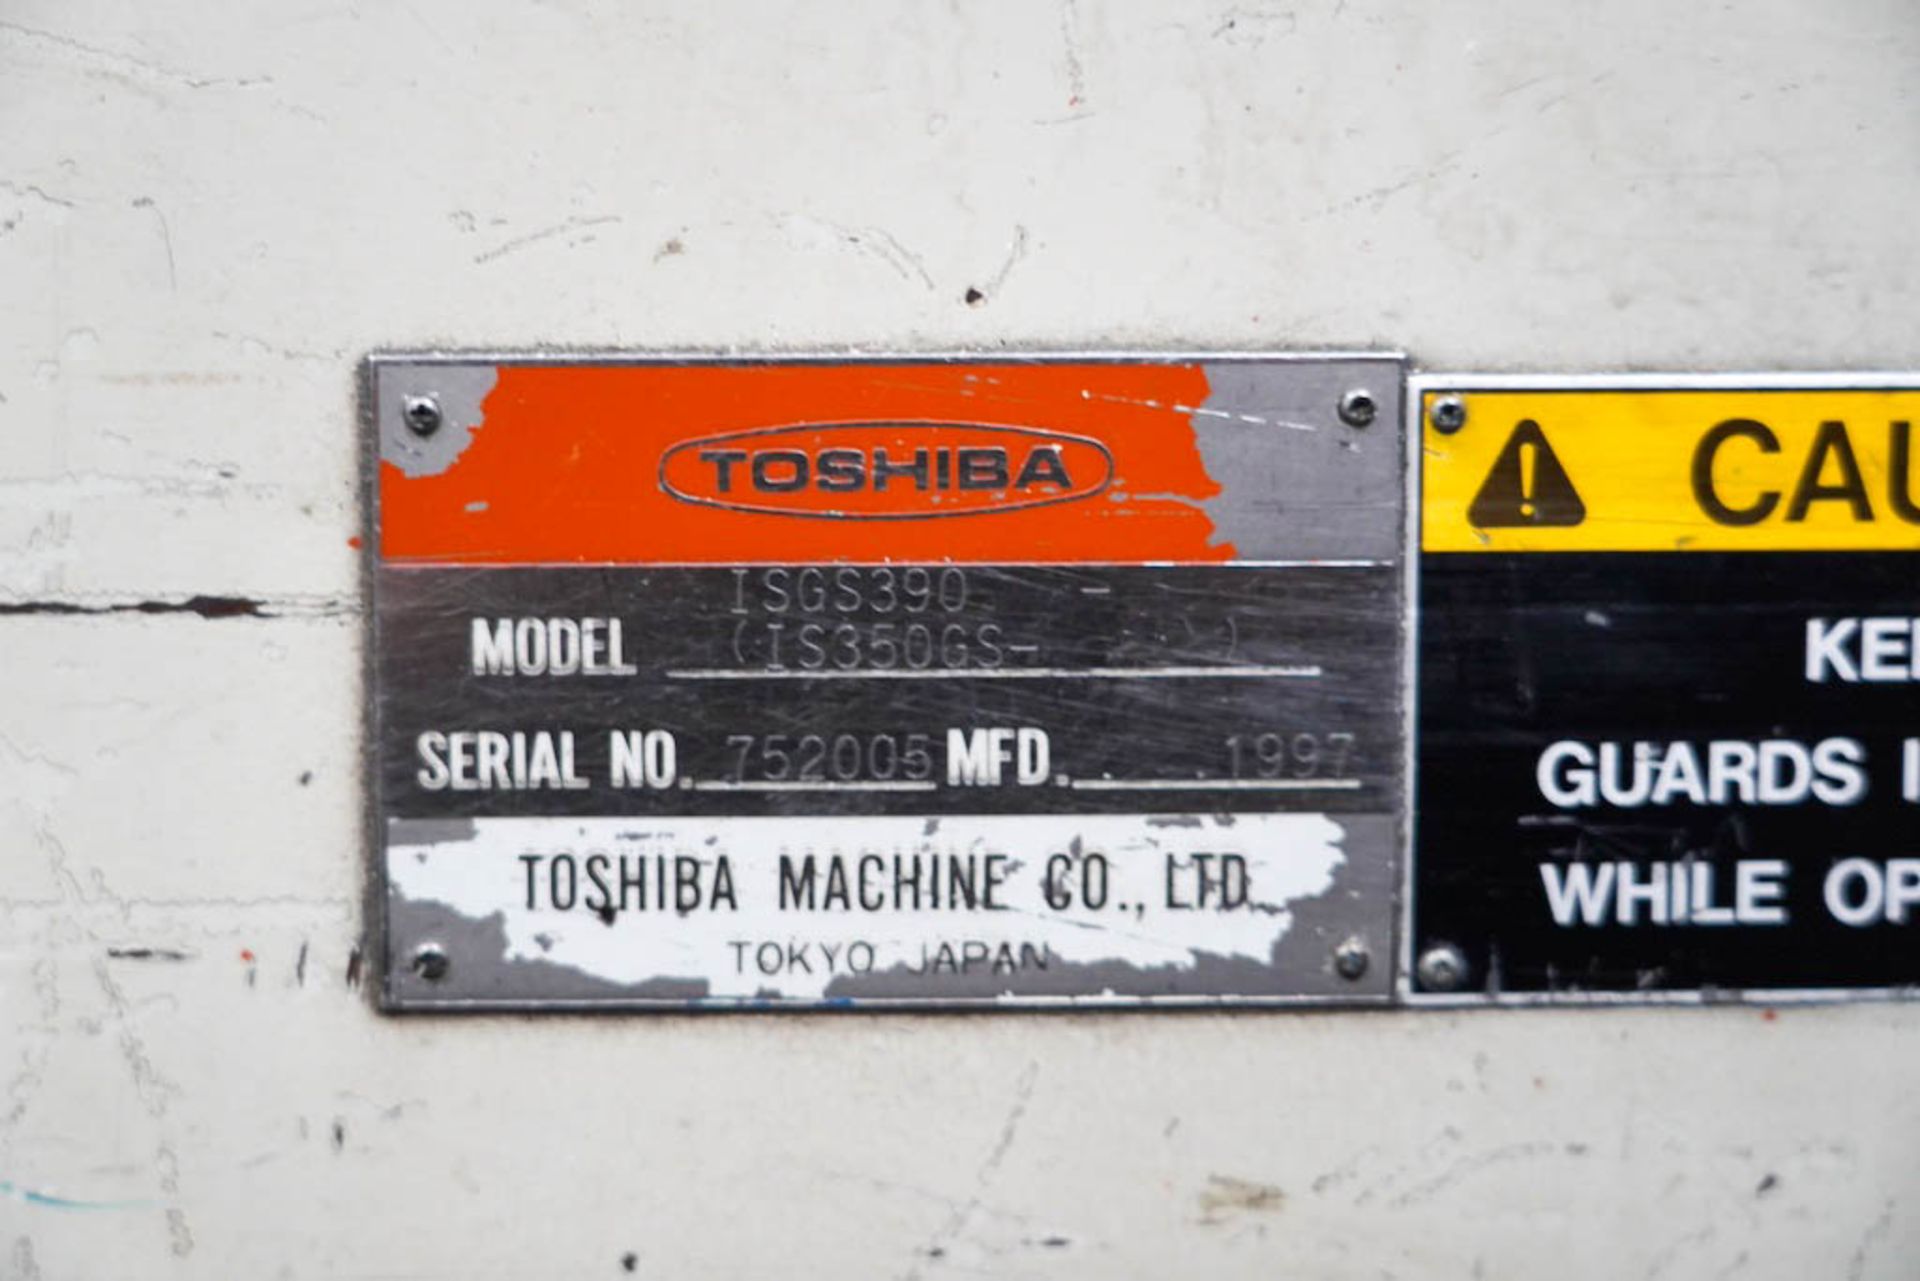 Toshiba 390 Ton Injection Molding Press - Image 7 of 7